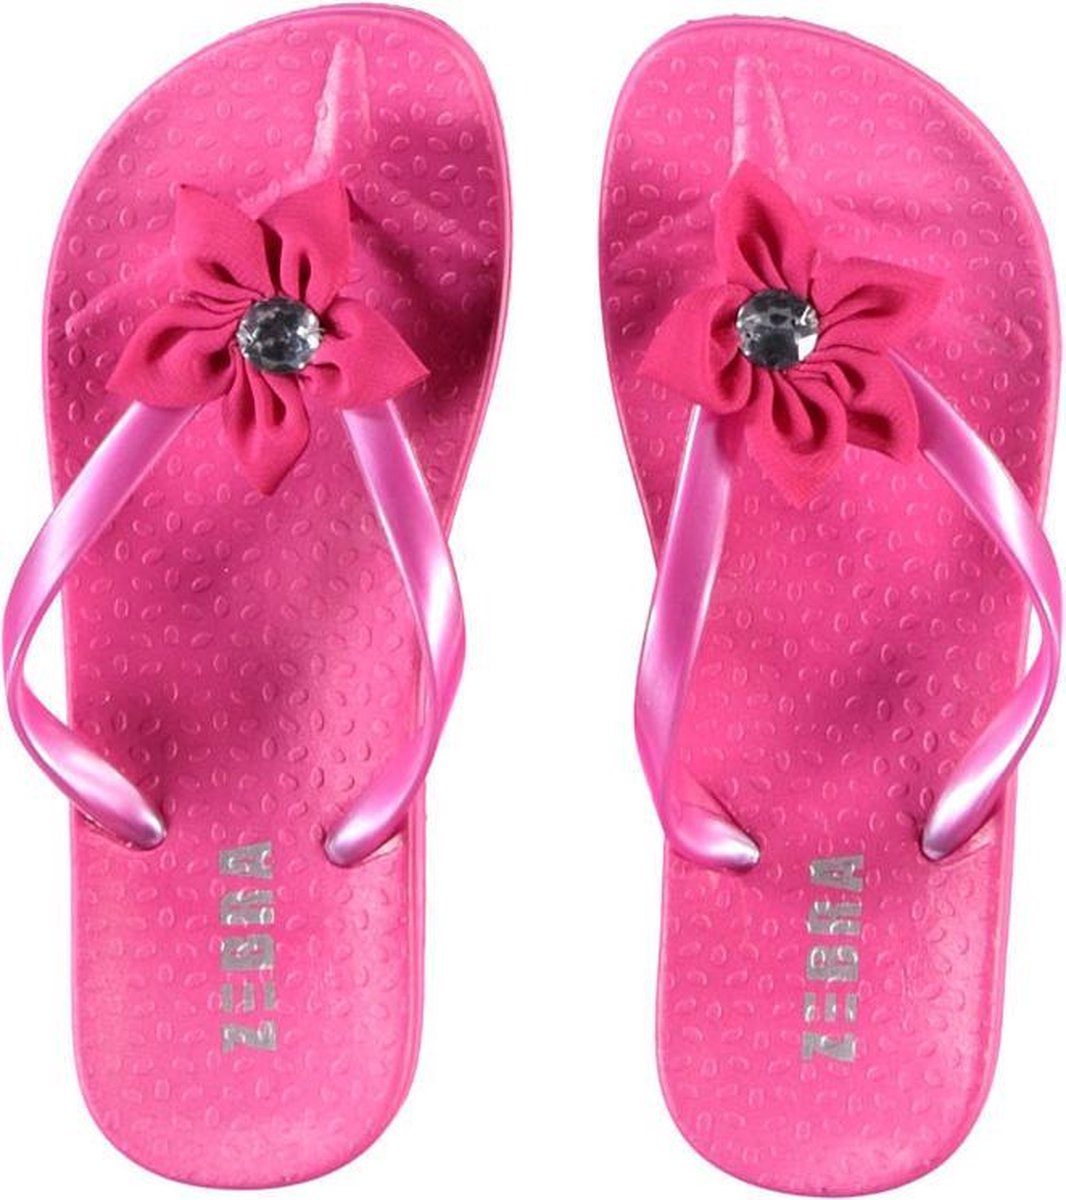 Zebra slippers Pink